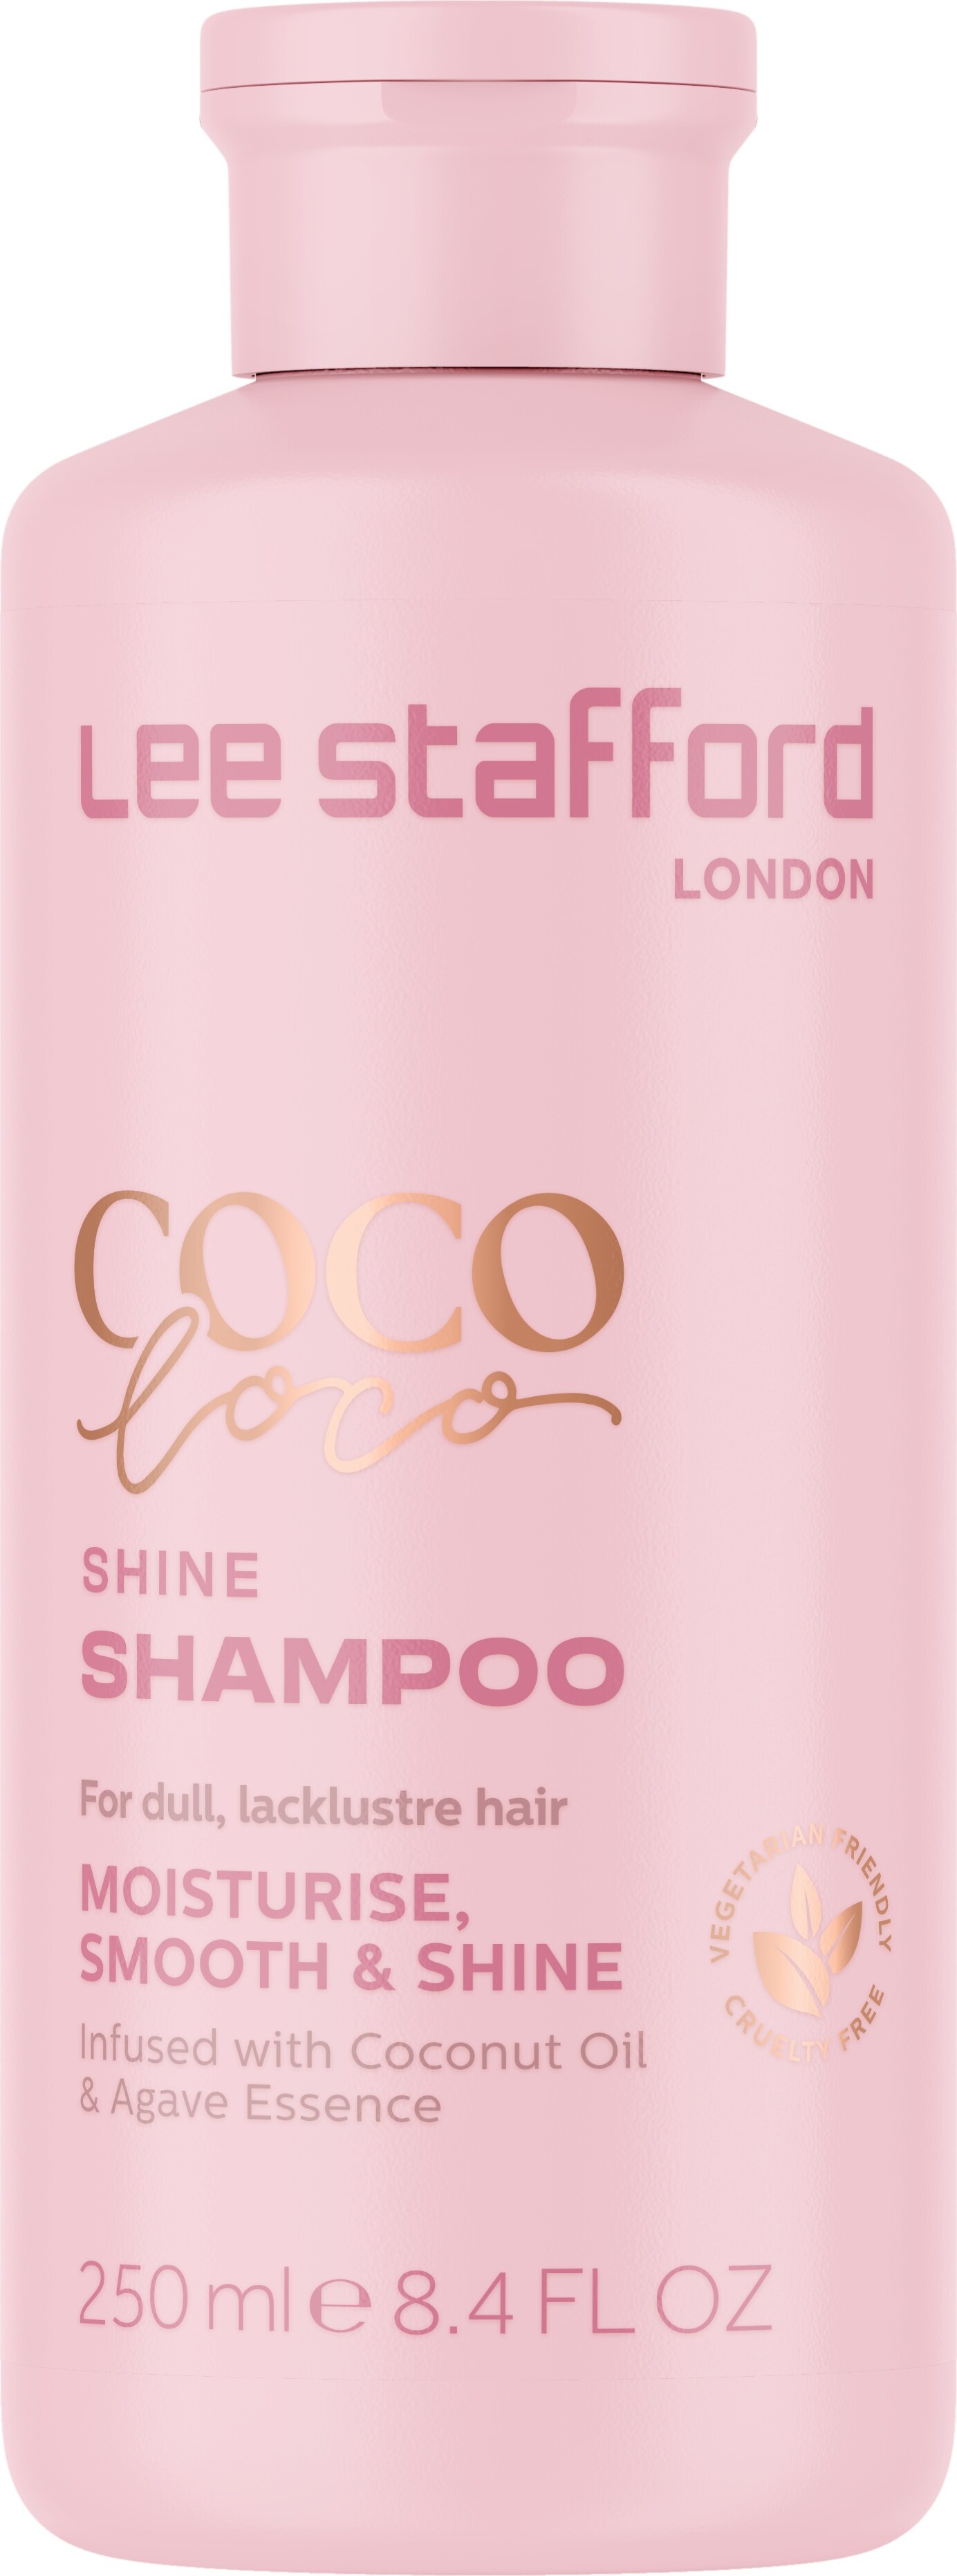 Se Lee Stafford - Coco Loco Shine Shampoo - 250 Ml hos Gucca.dk